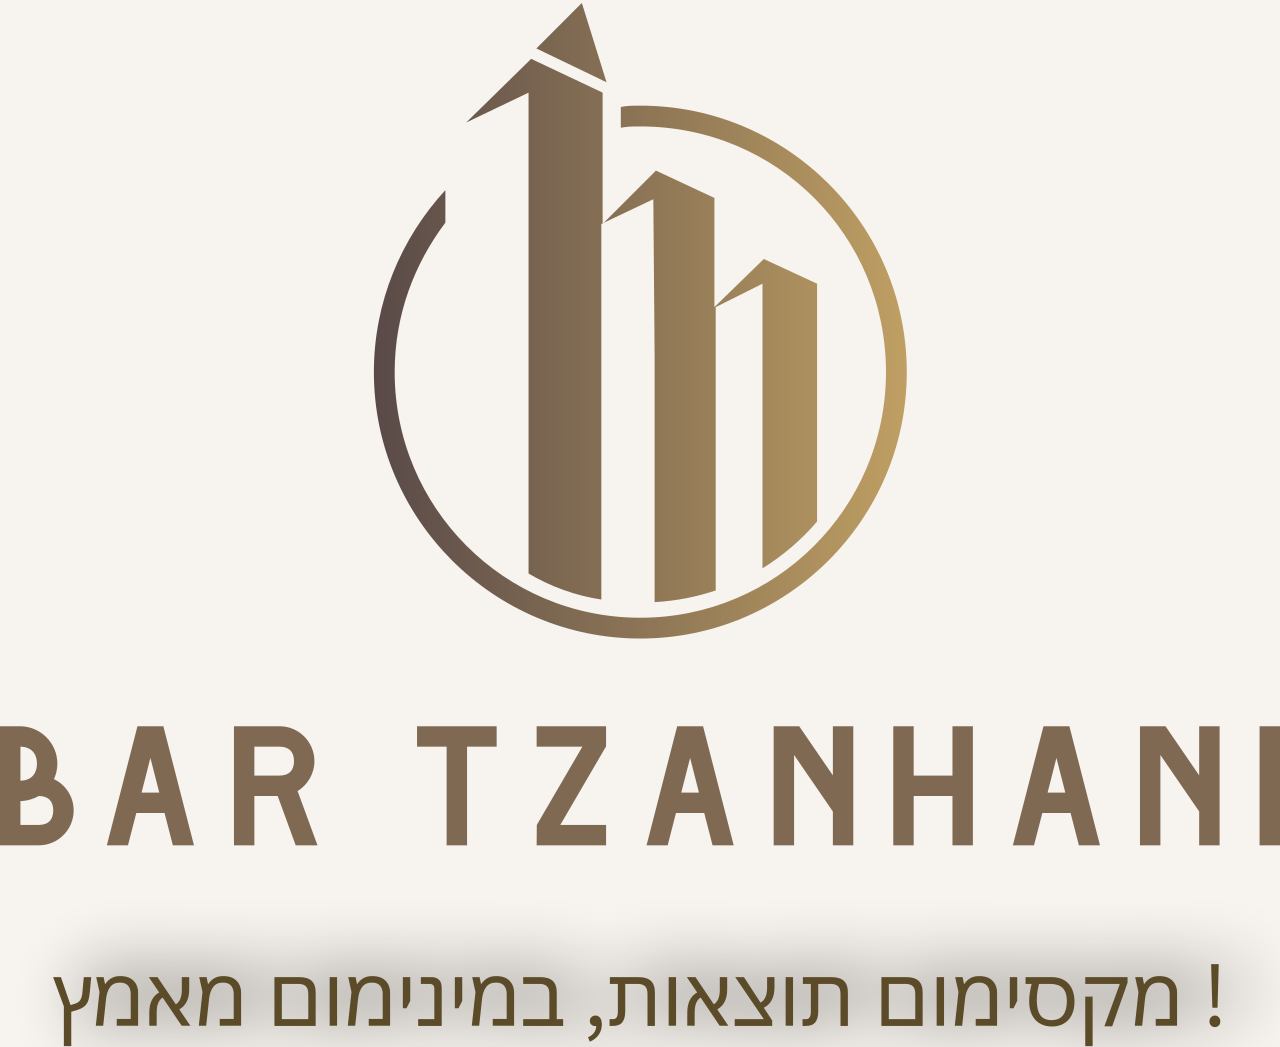 BAR TZANHANI's web page